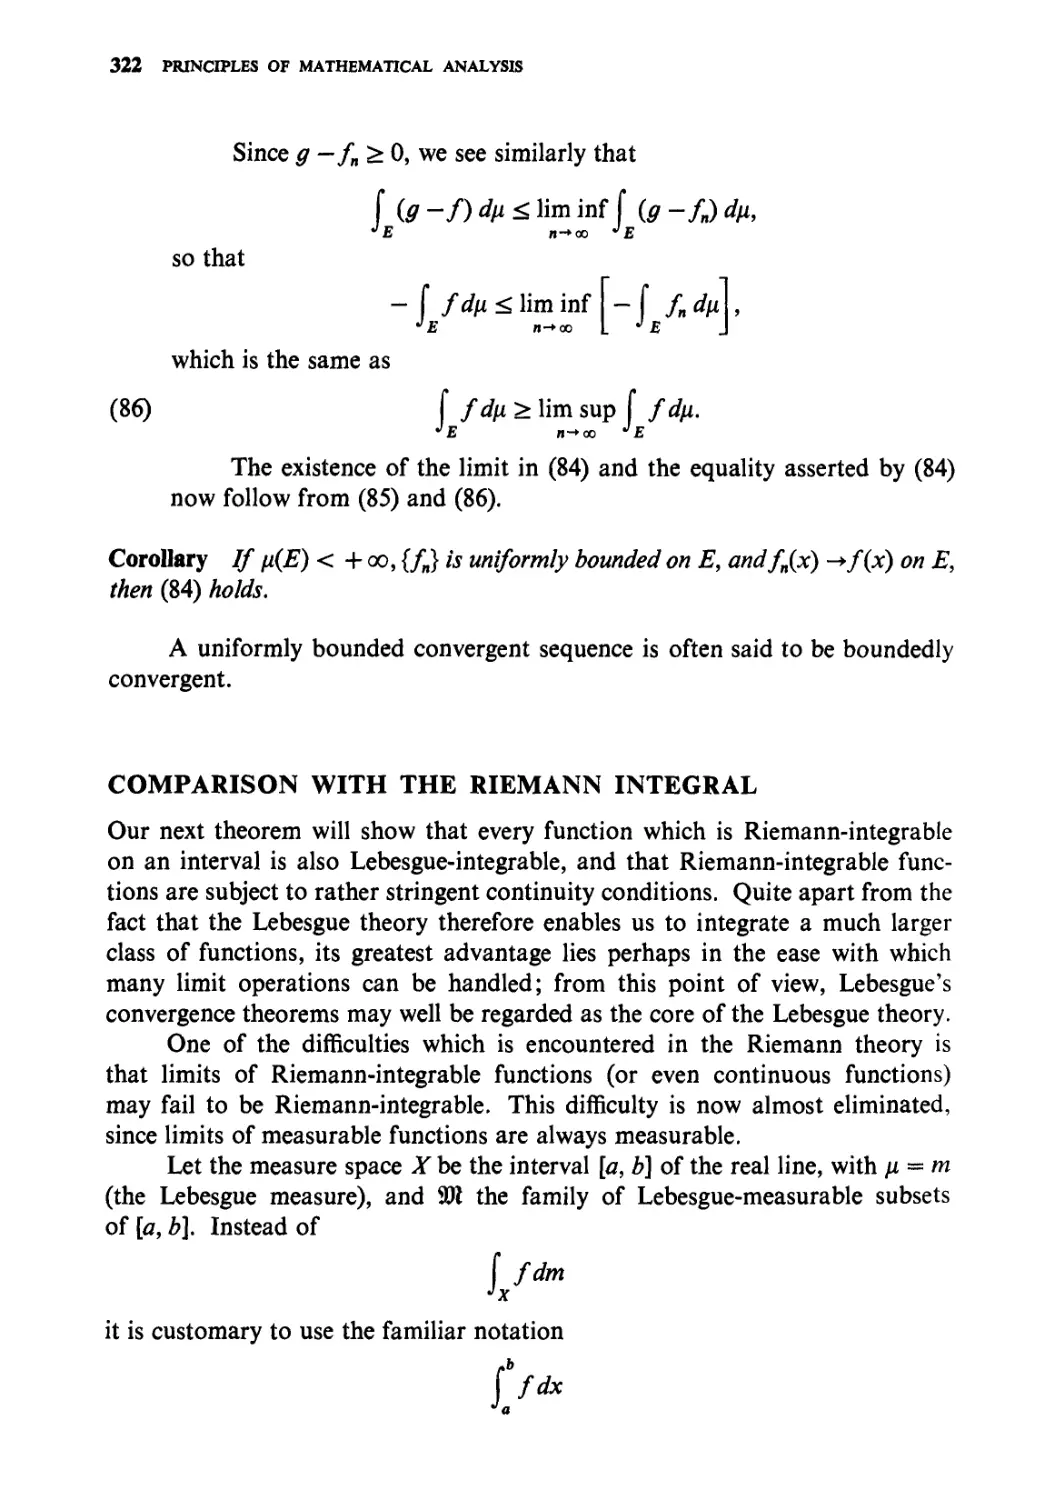 Comparison with the Riemann integral